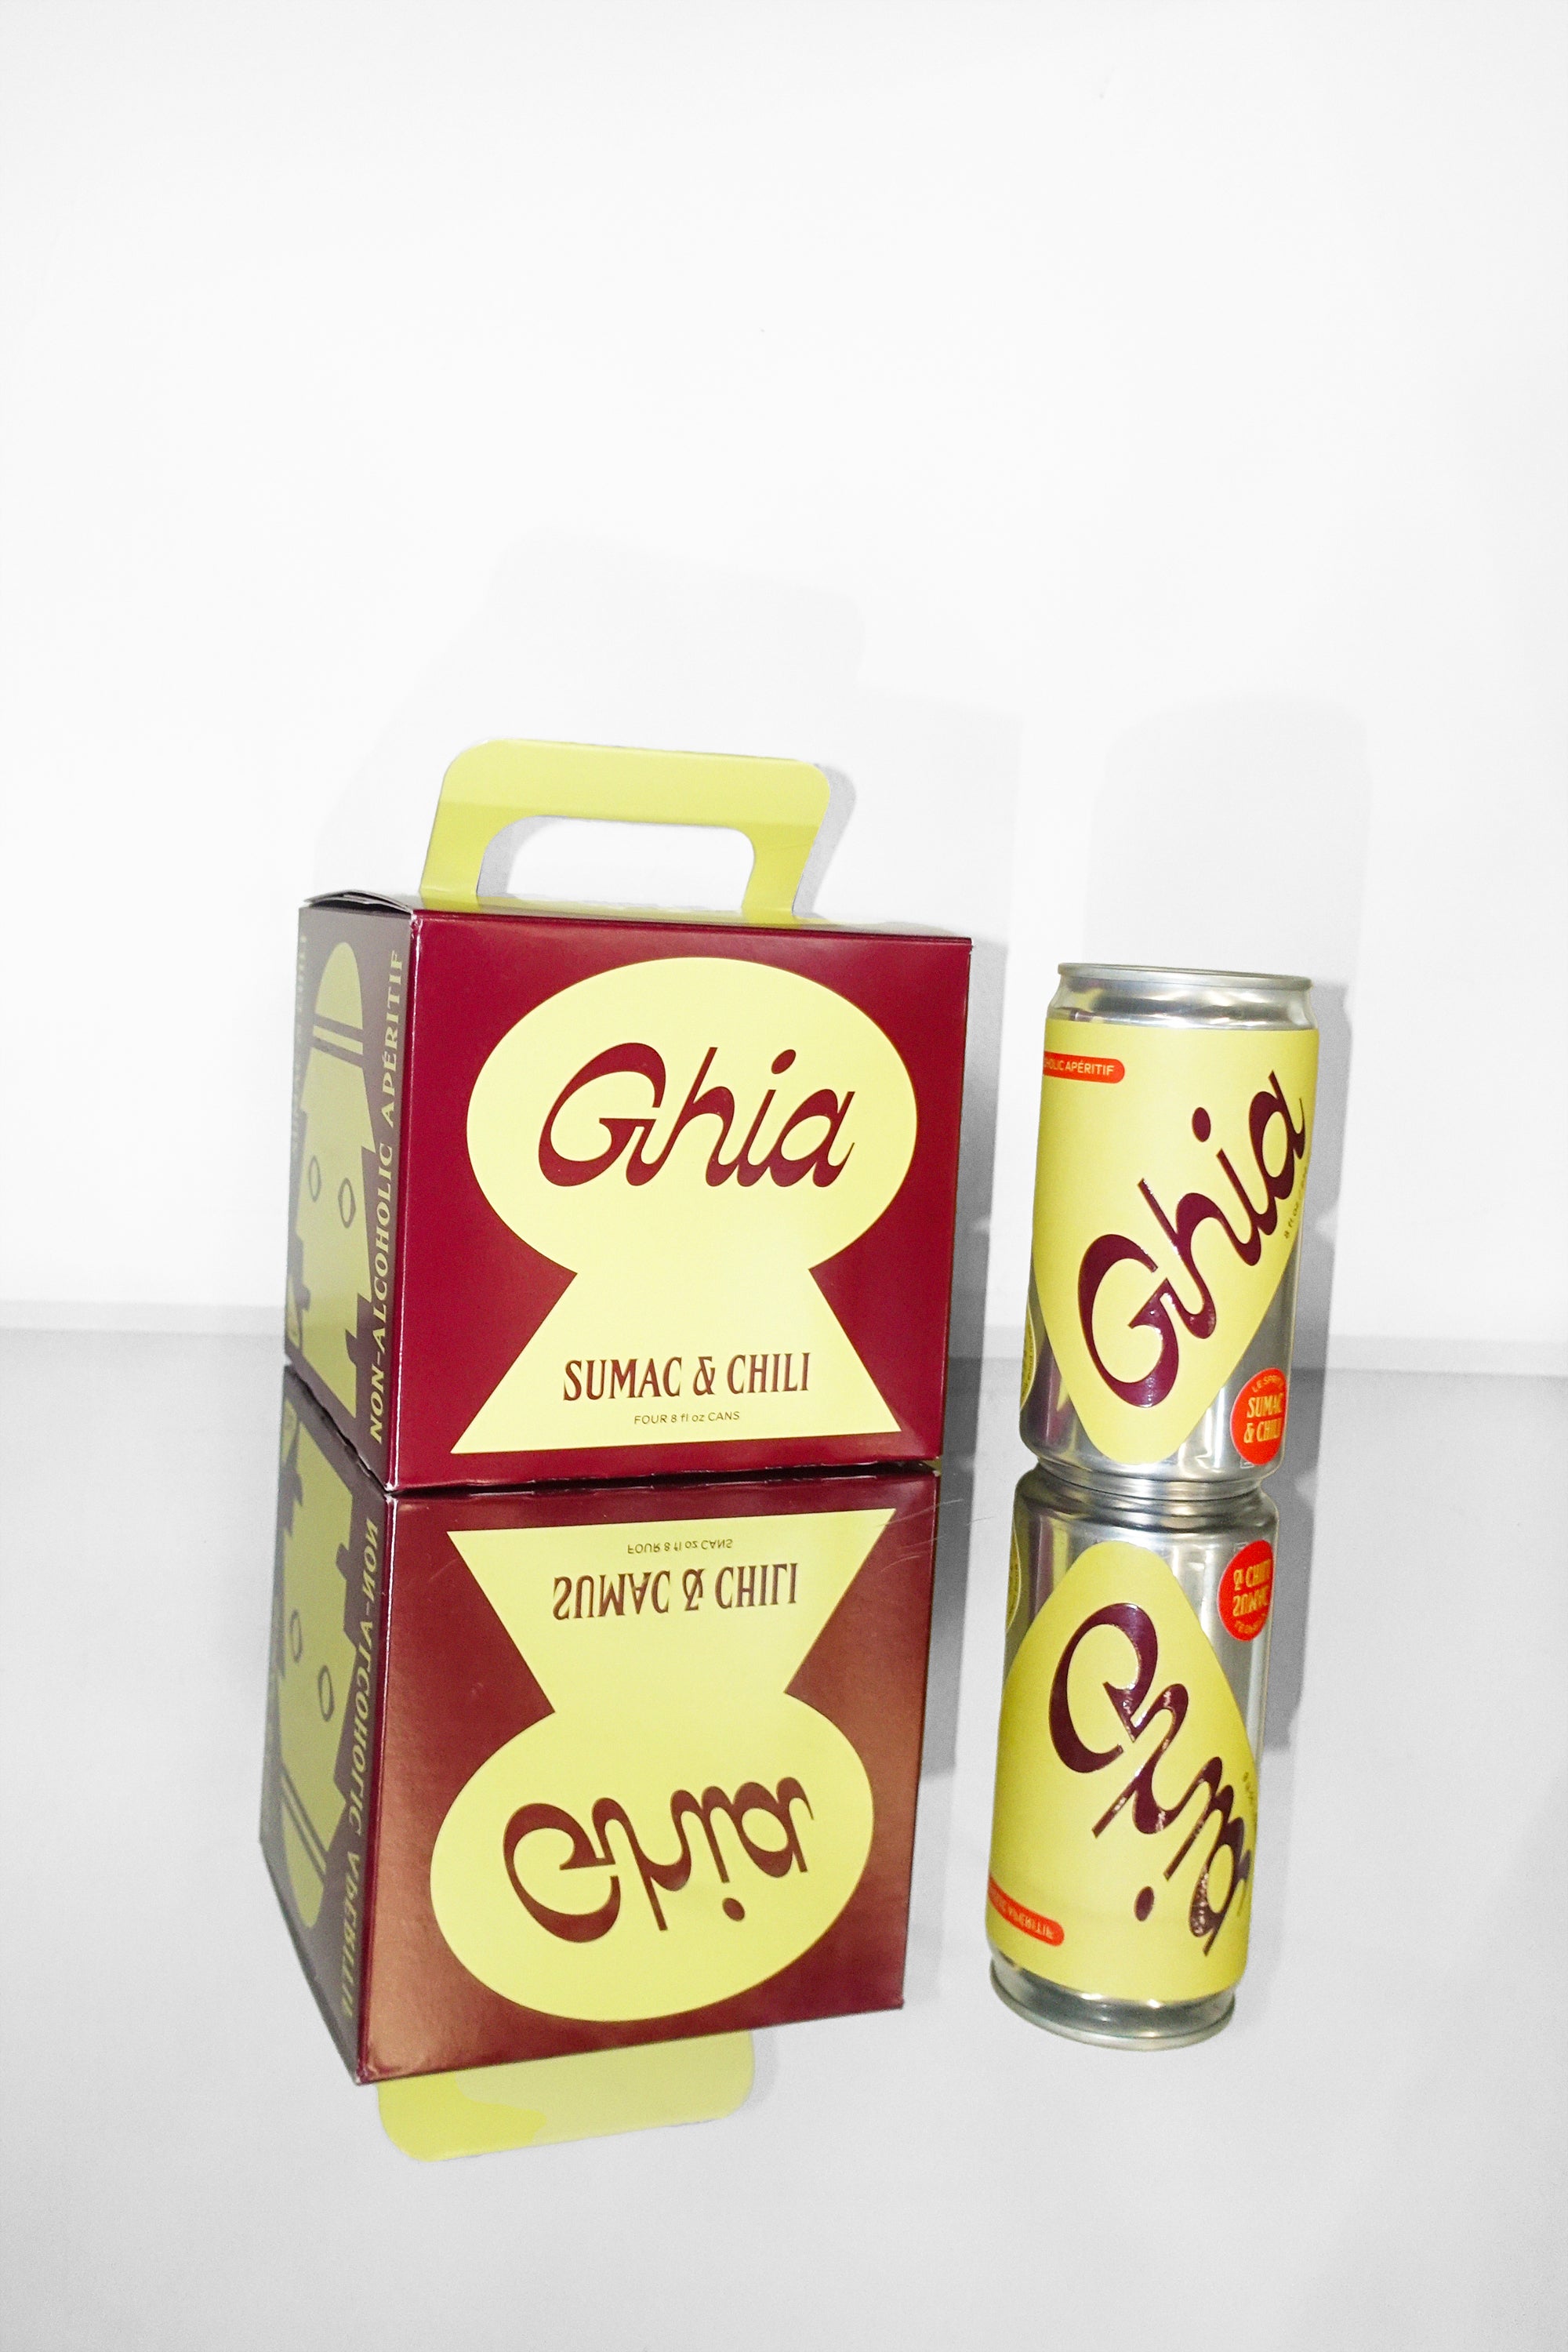 Le Spritz: Sumac & Chili: Four Pack by Ghia